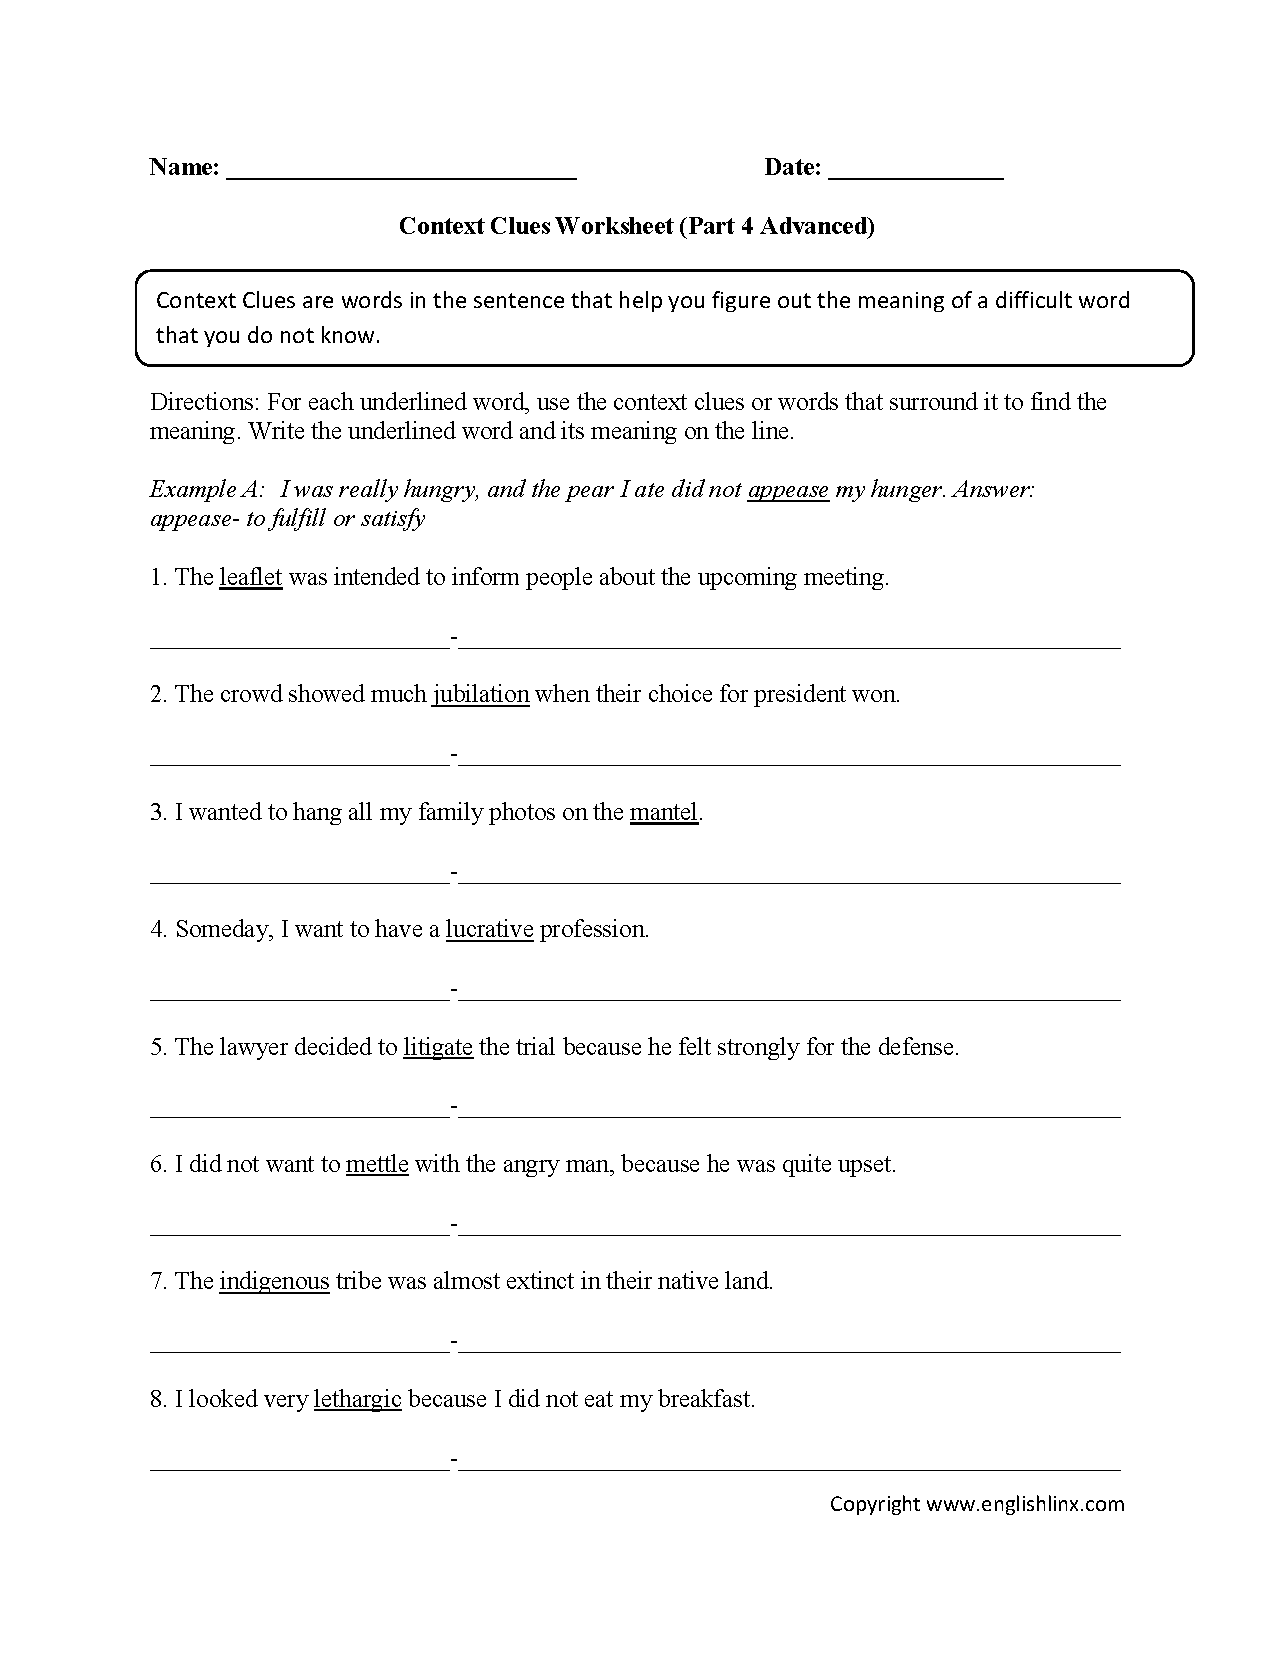 Context Clues Worksheets Advanced Part 4